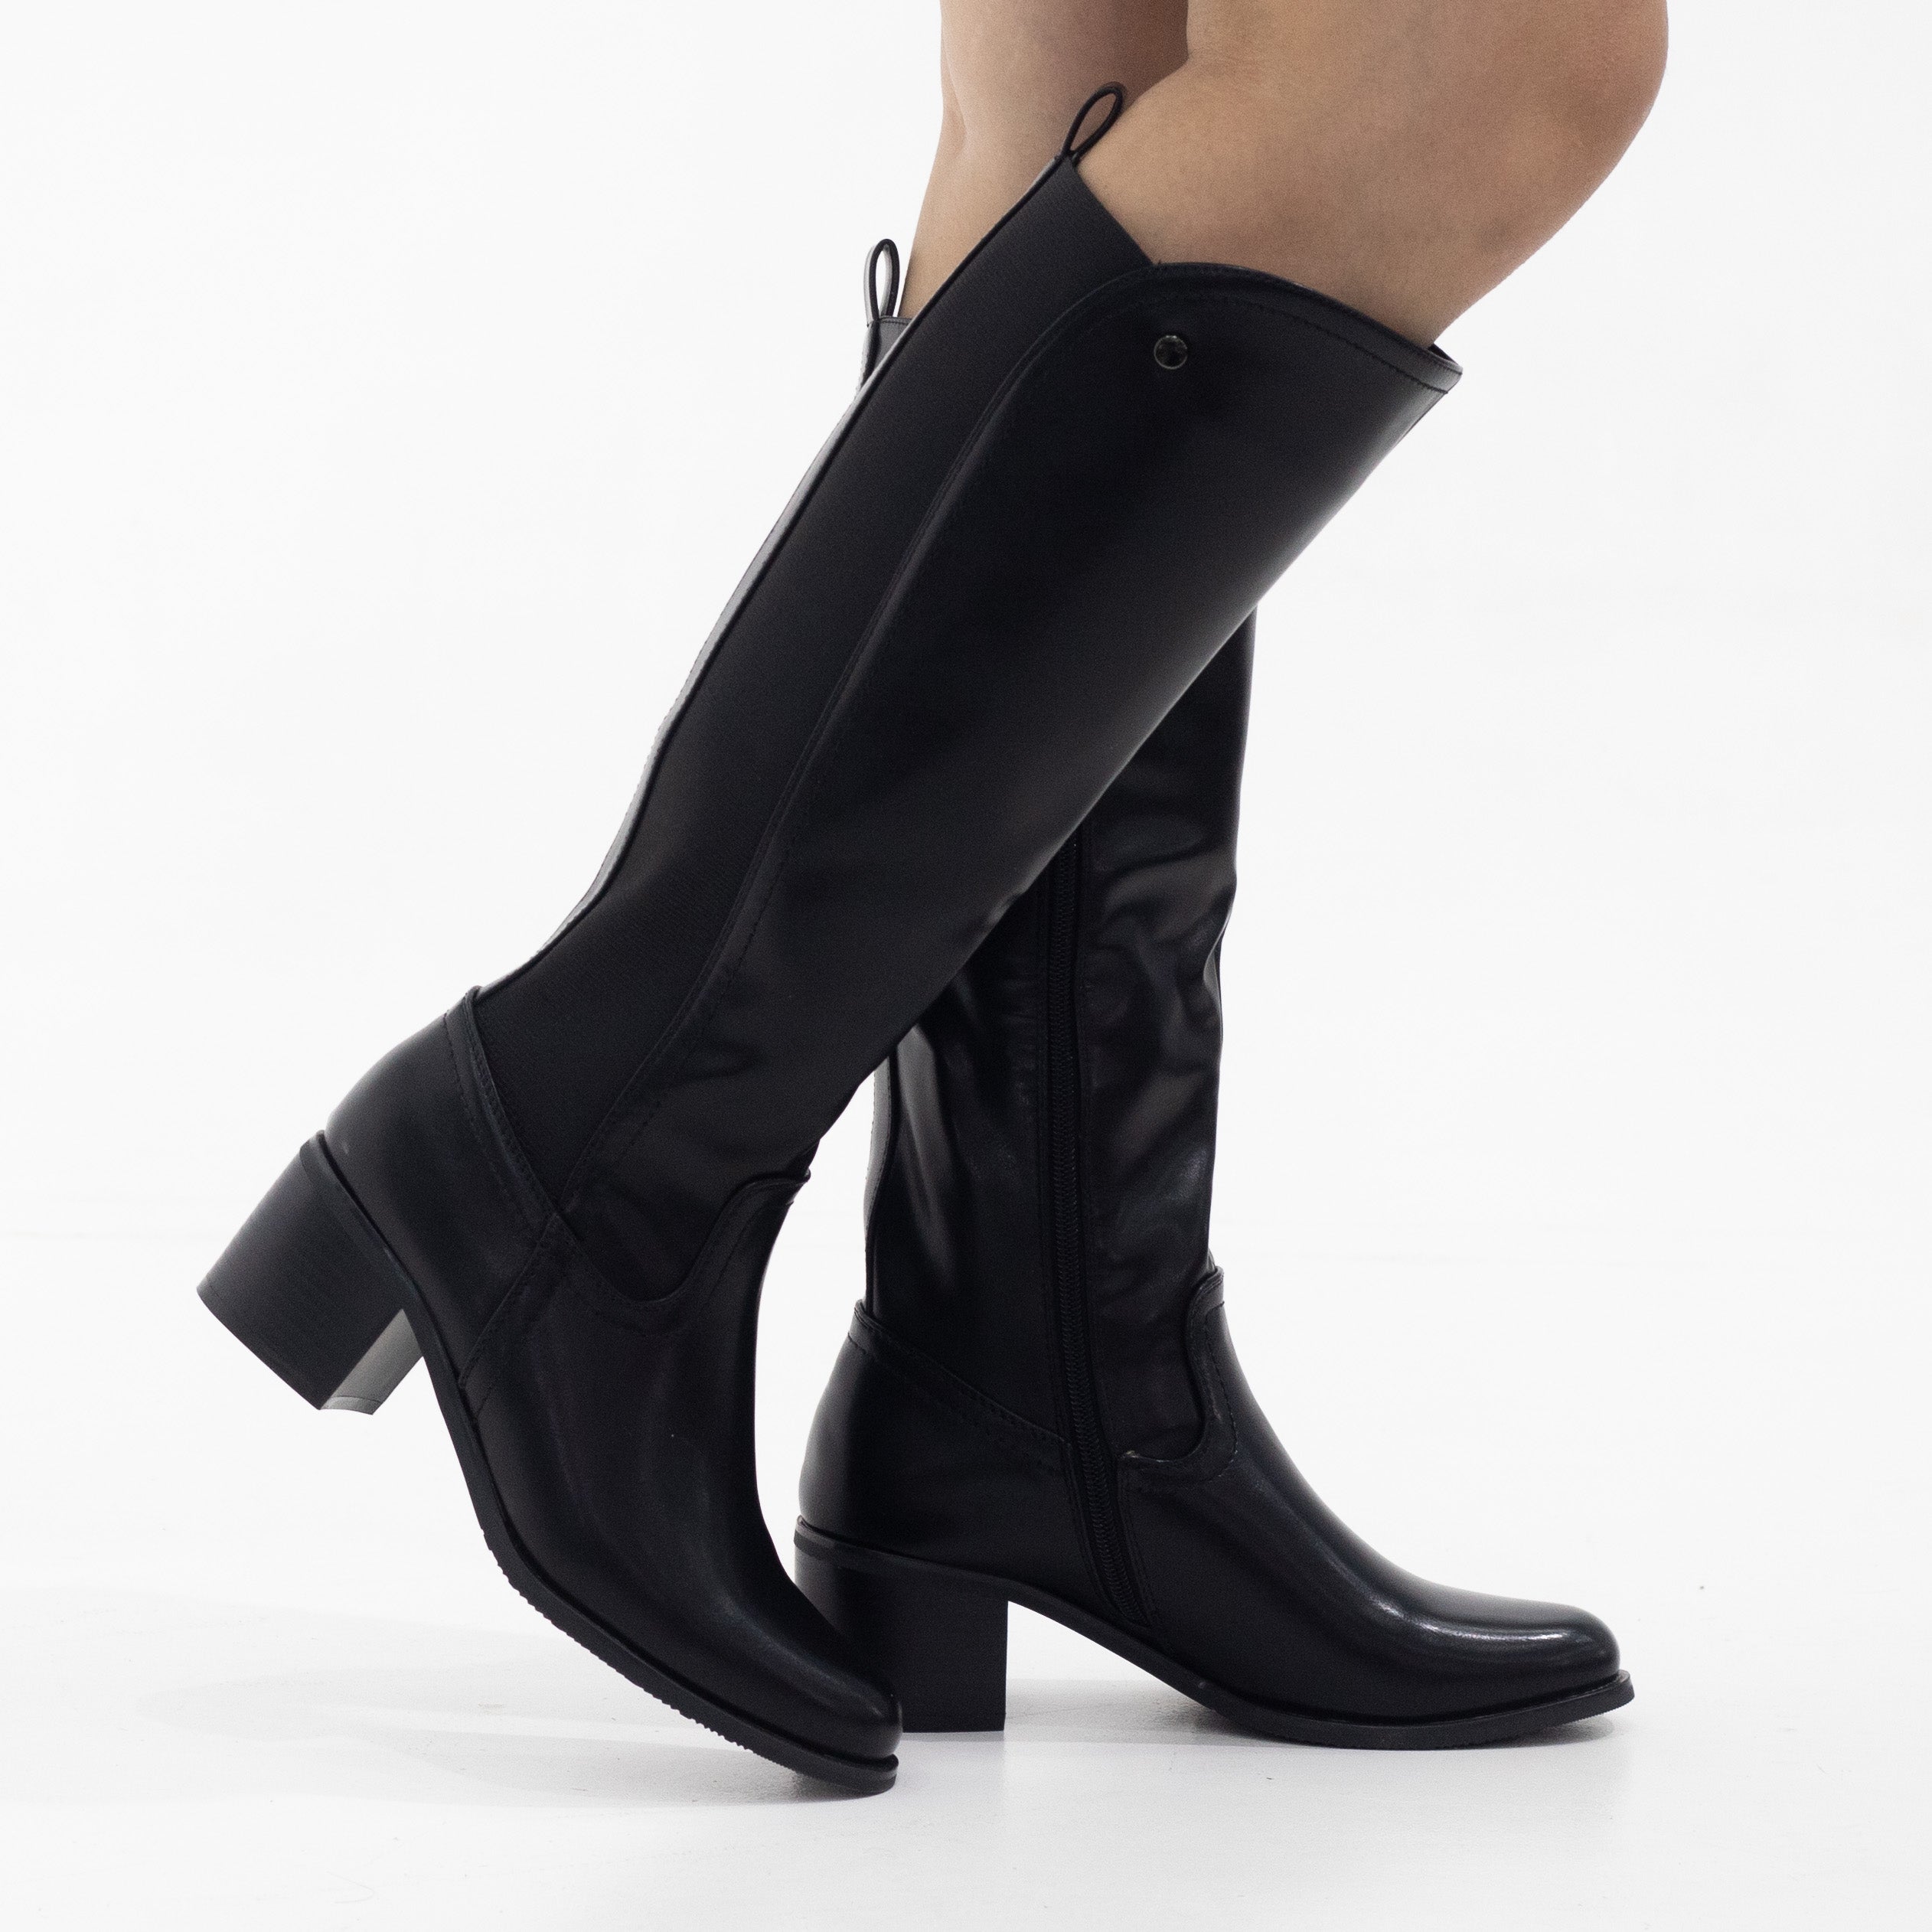 Wearever Wear Ever Women's Julia Black Knee High Riding Boots